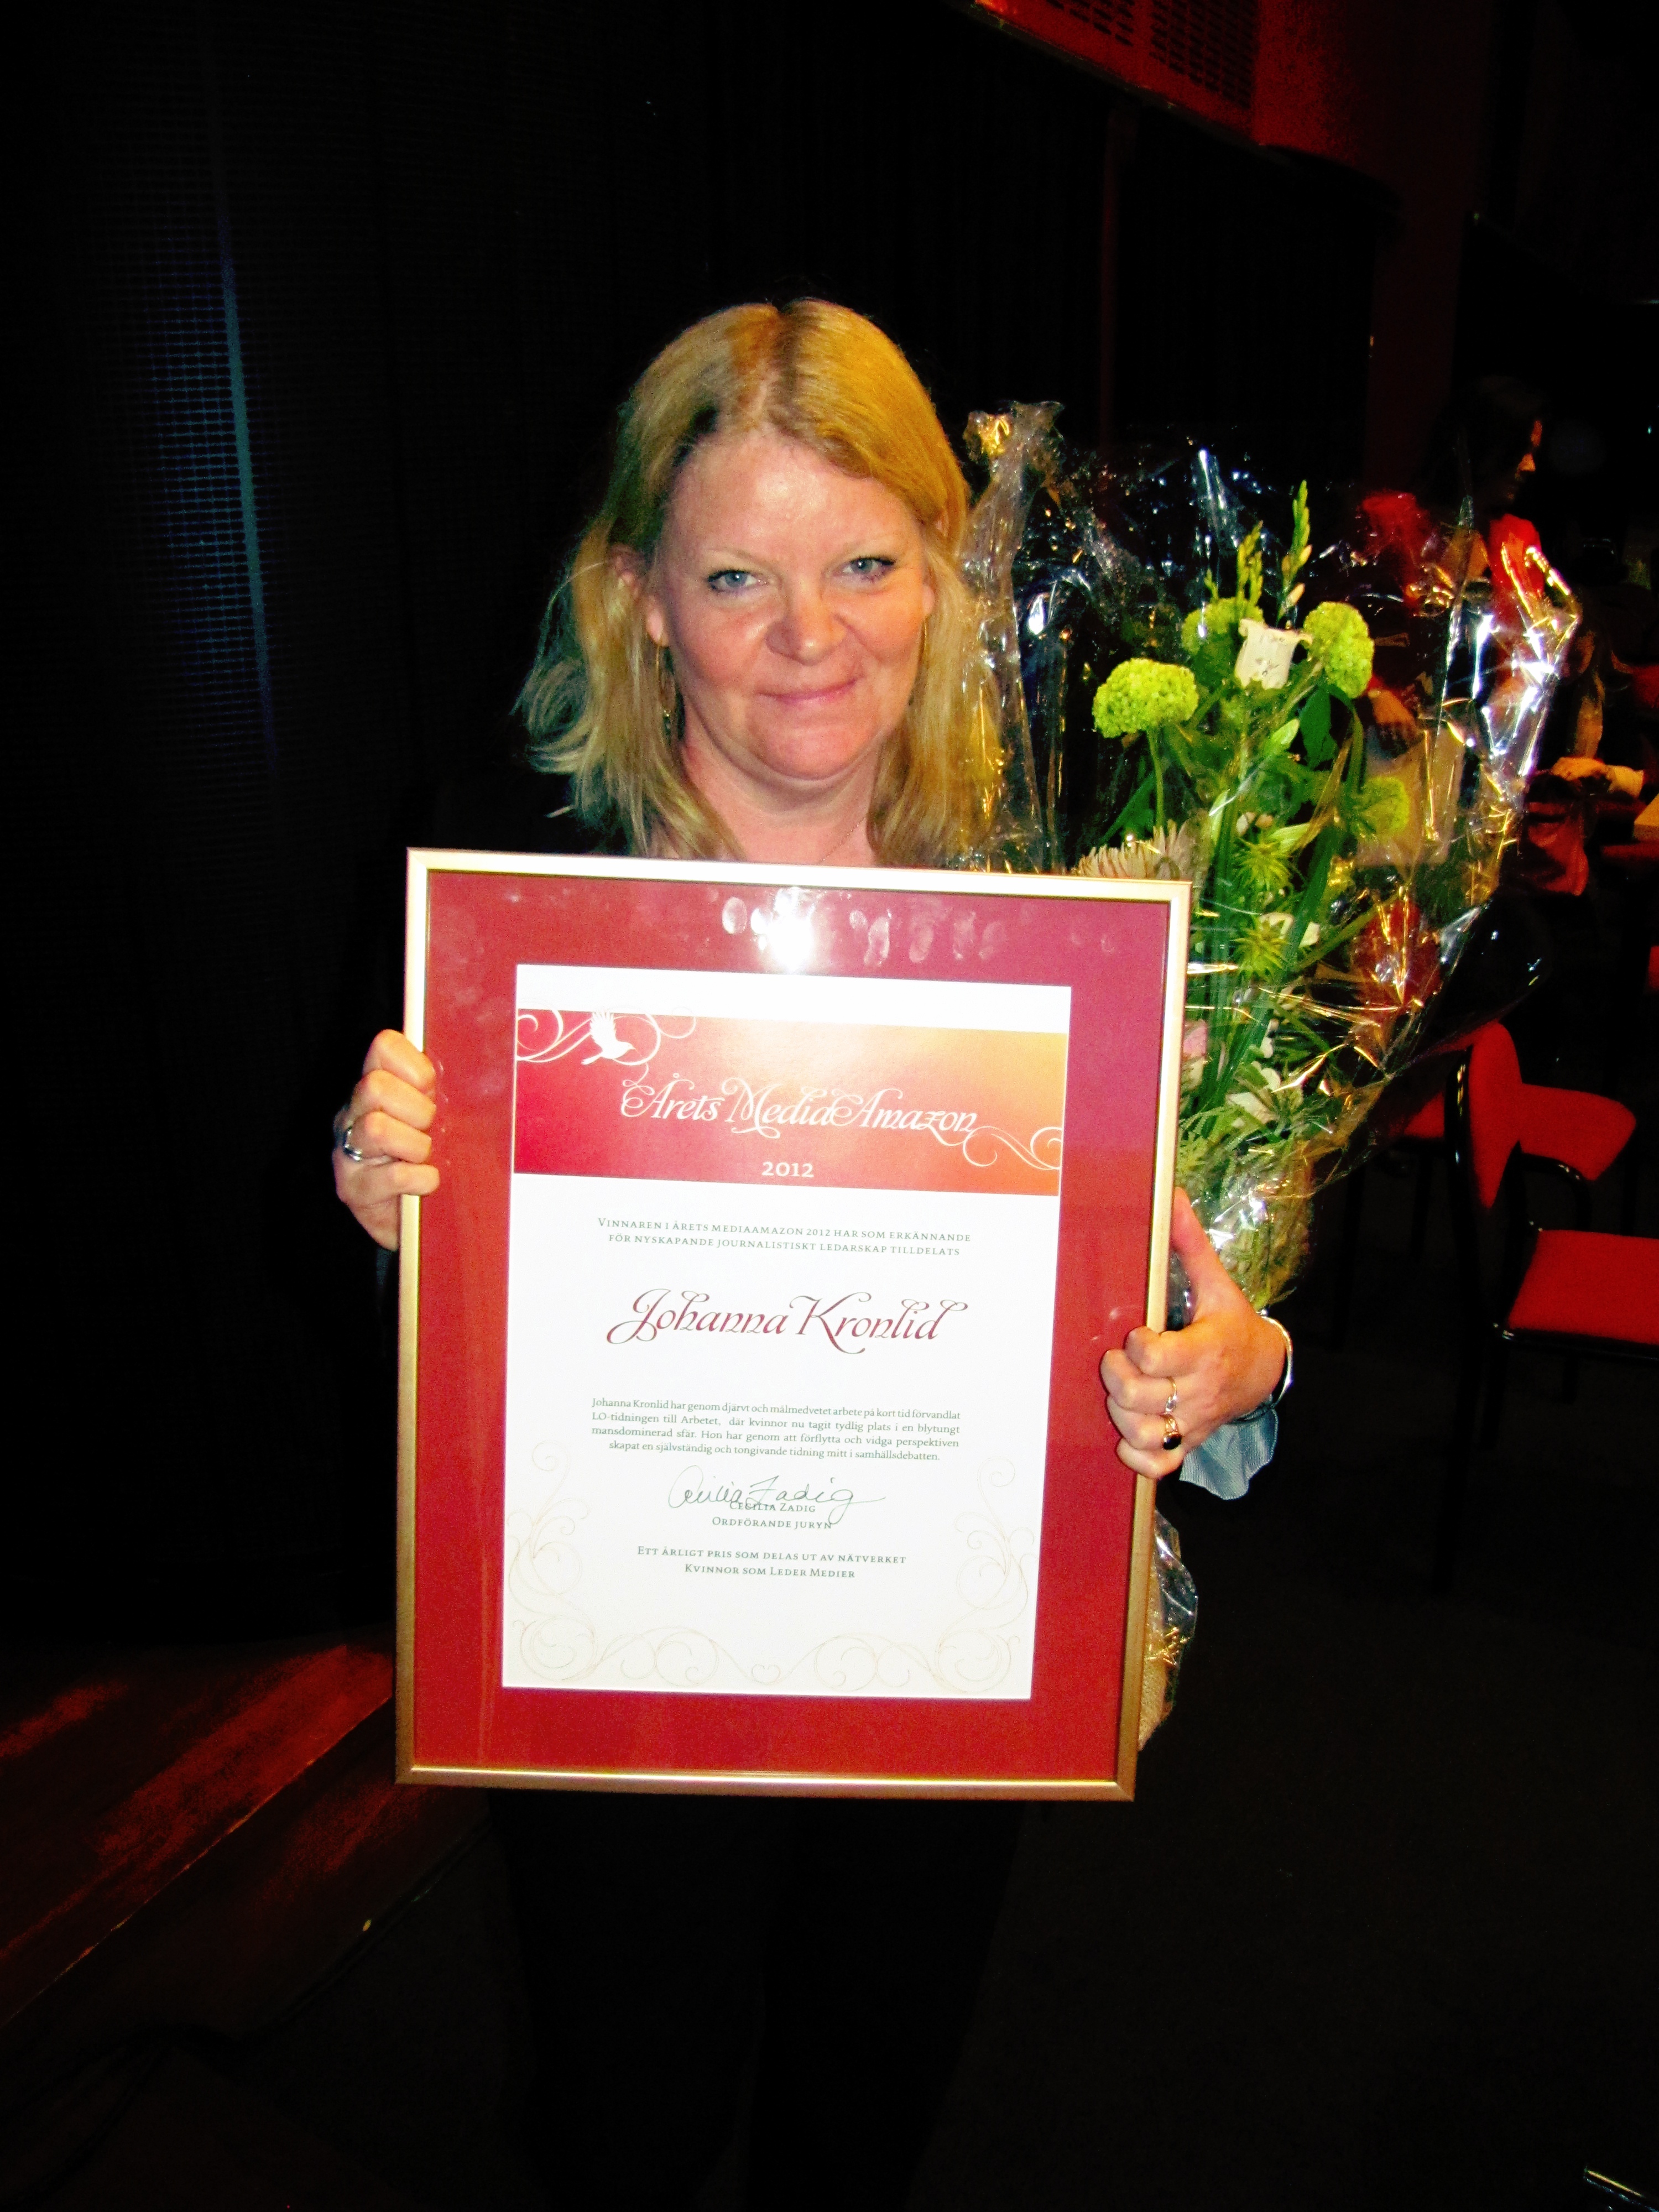 Årets MediaAmazon 2012 Johanna Kronlid